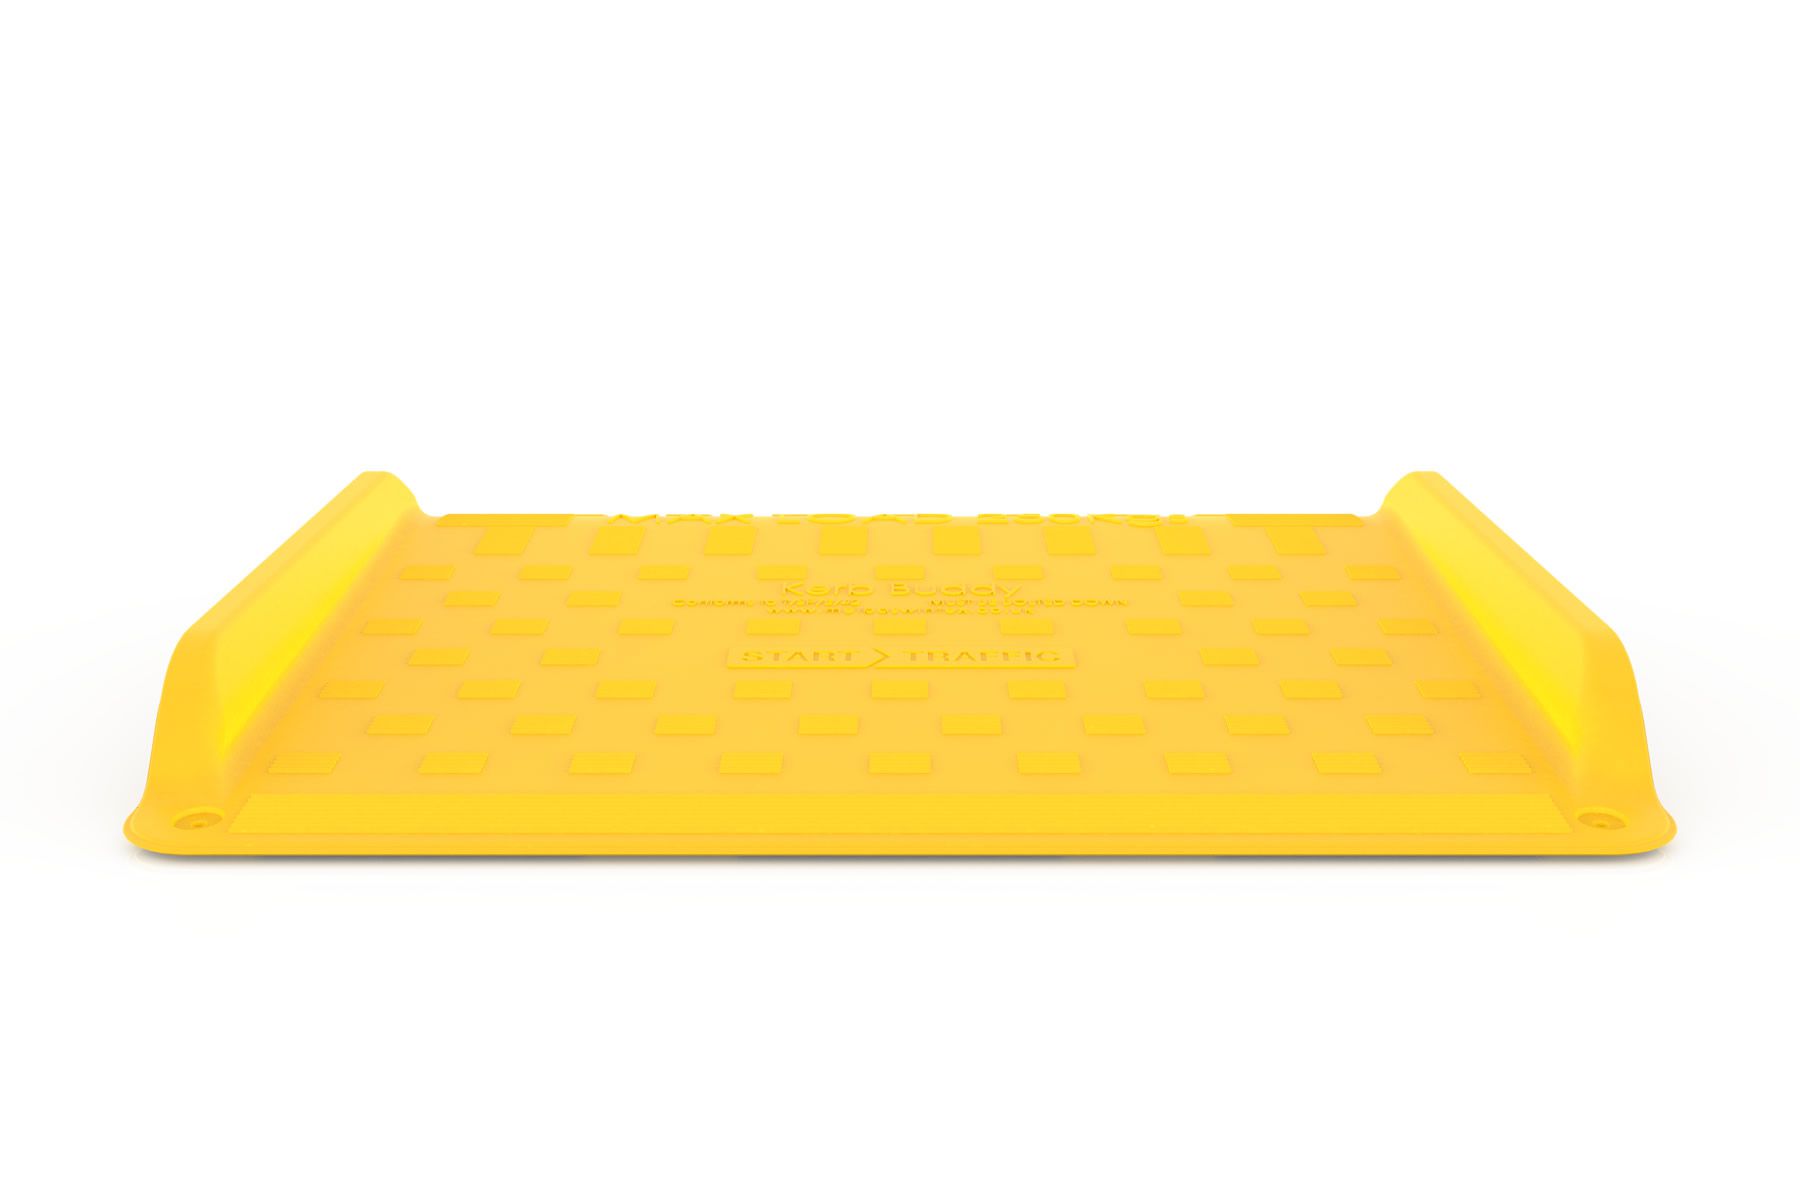 BAIYING Curb Ramps Color : Yellow, Size : 49X22X4CM Bottom of Grid Non-slip PVC for Motorcycle Wheelbarrow Wheelchair Battery Car Sidewalk Curb Ramp Threshold Ramp 7 Sizes 2 Colors